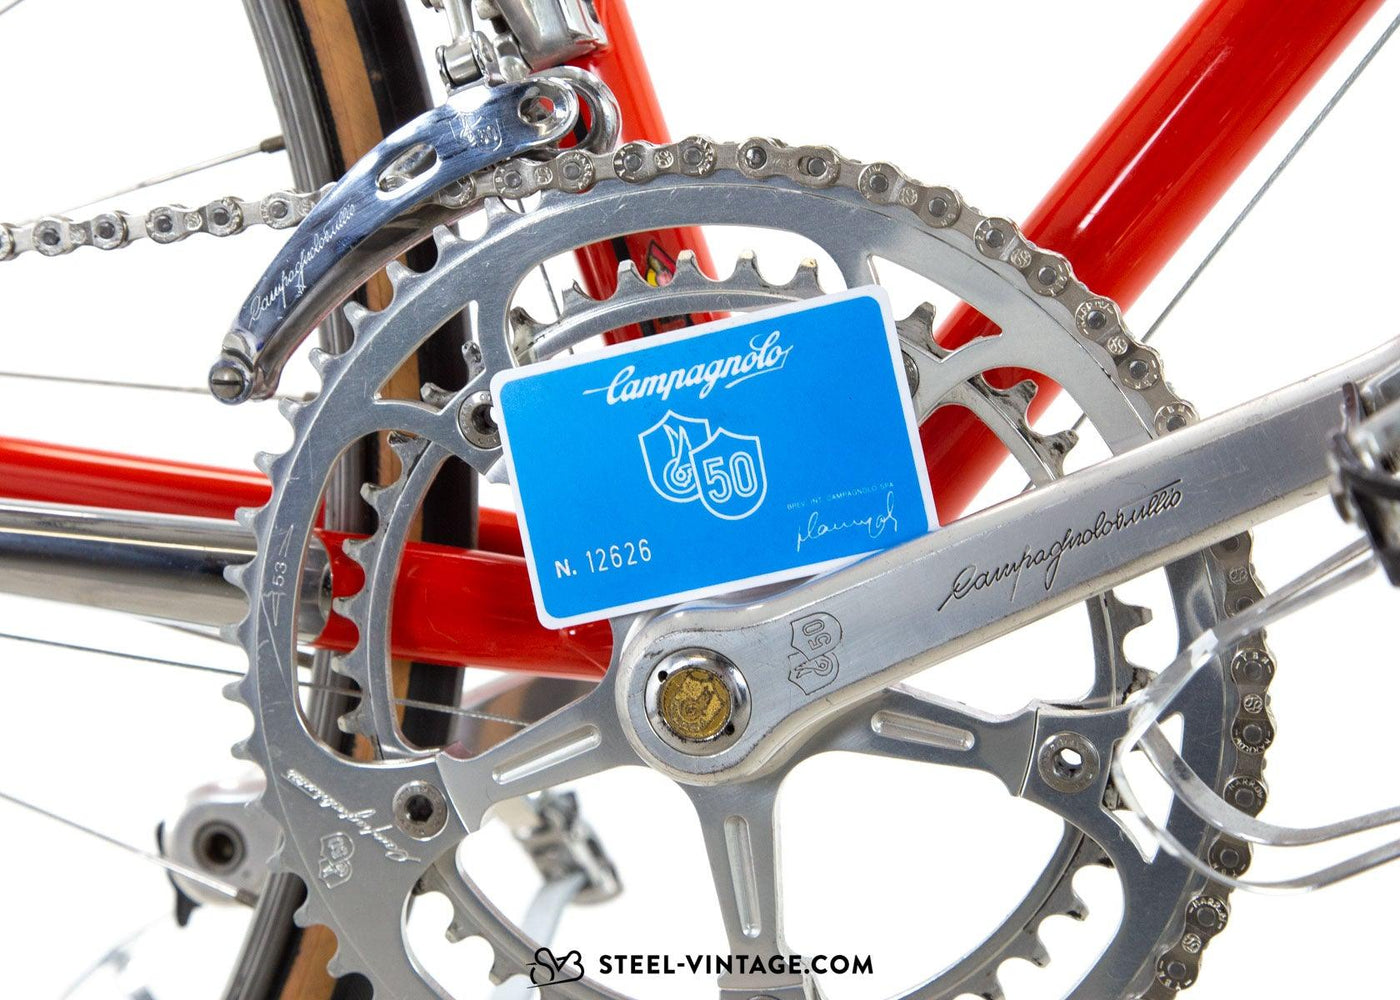 Cinelli Supercorsa Campagnolo 50 Anniversary Bike 1980s - Steel Vintage Bikes